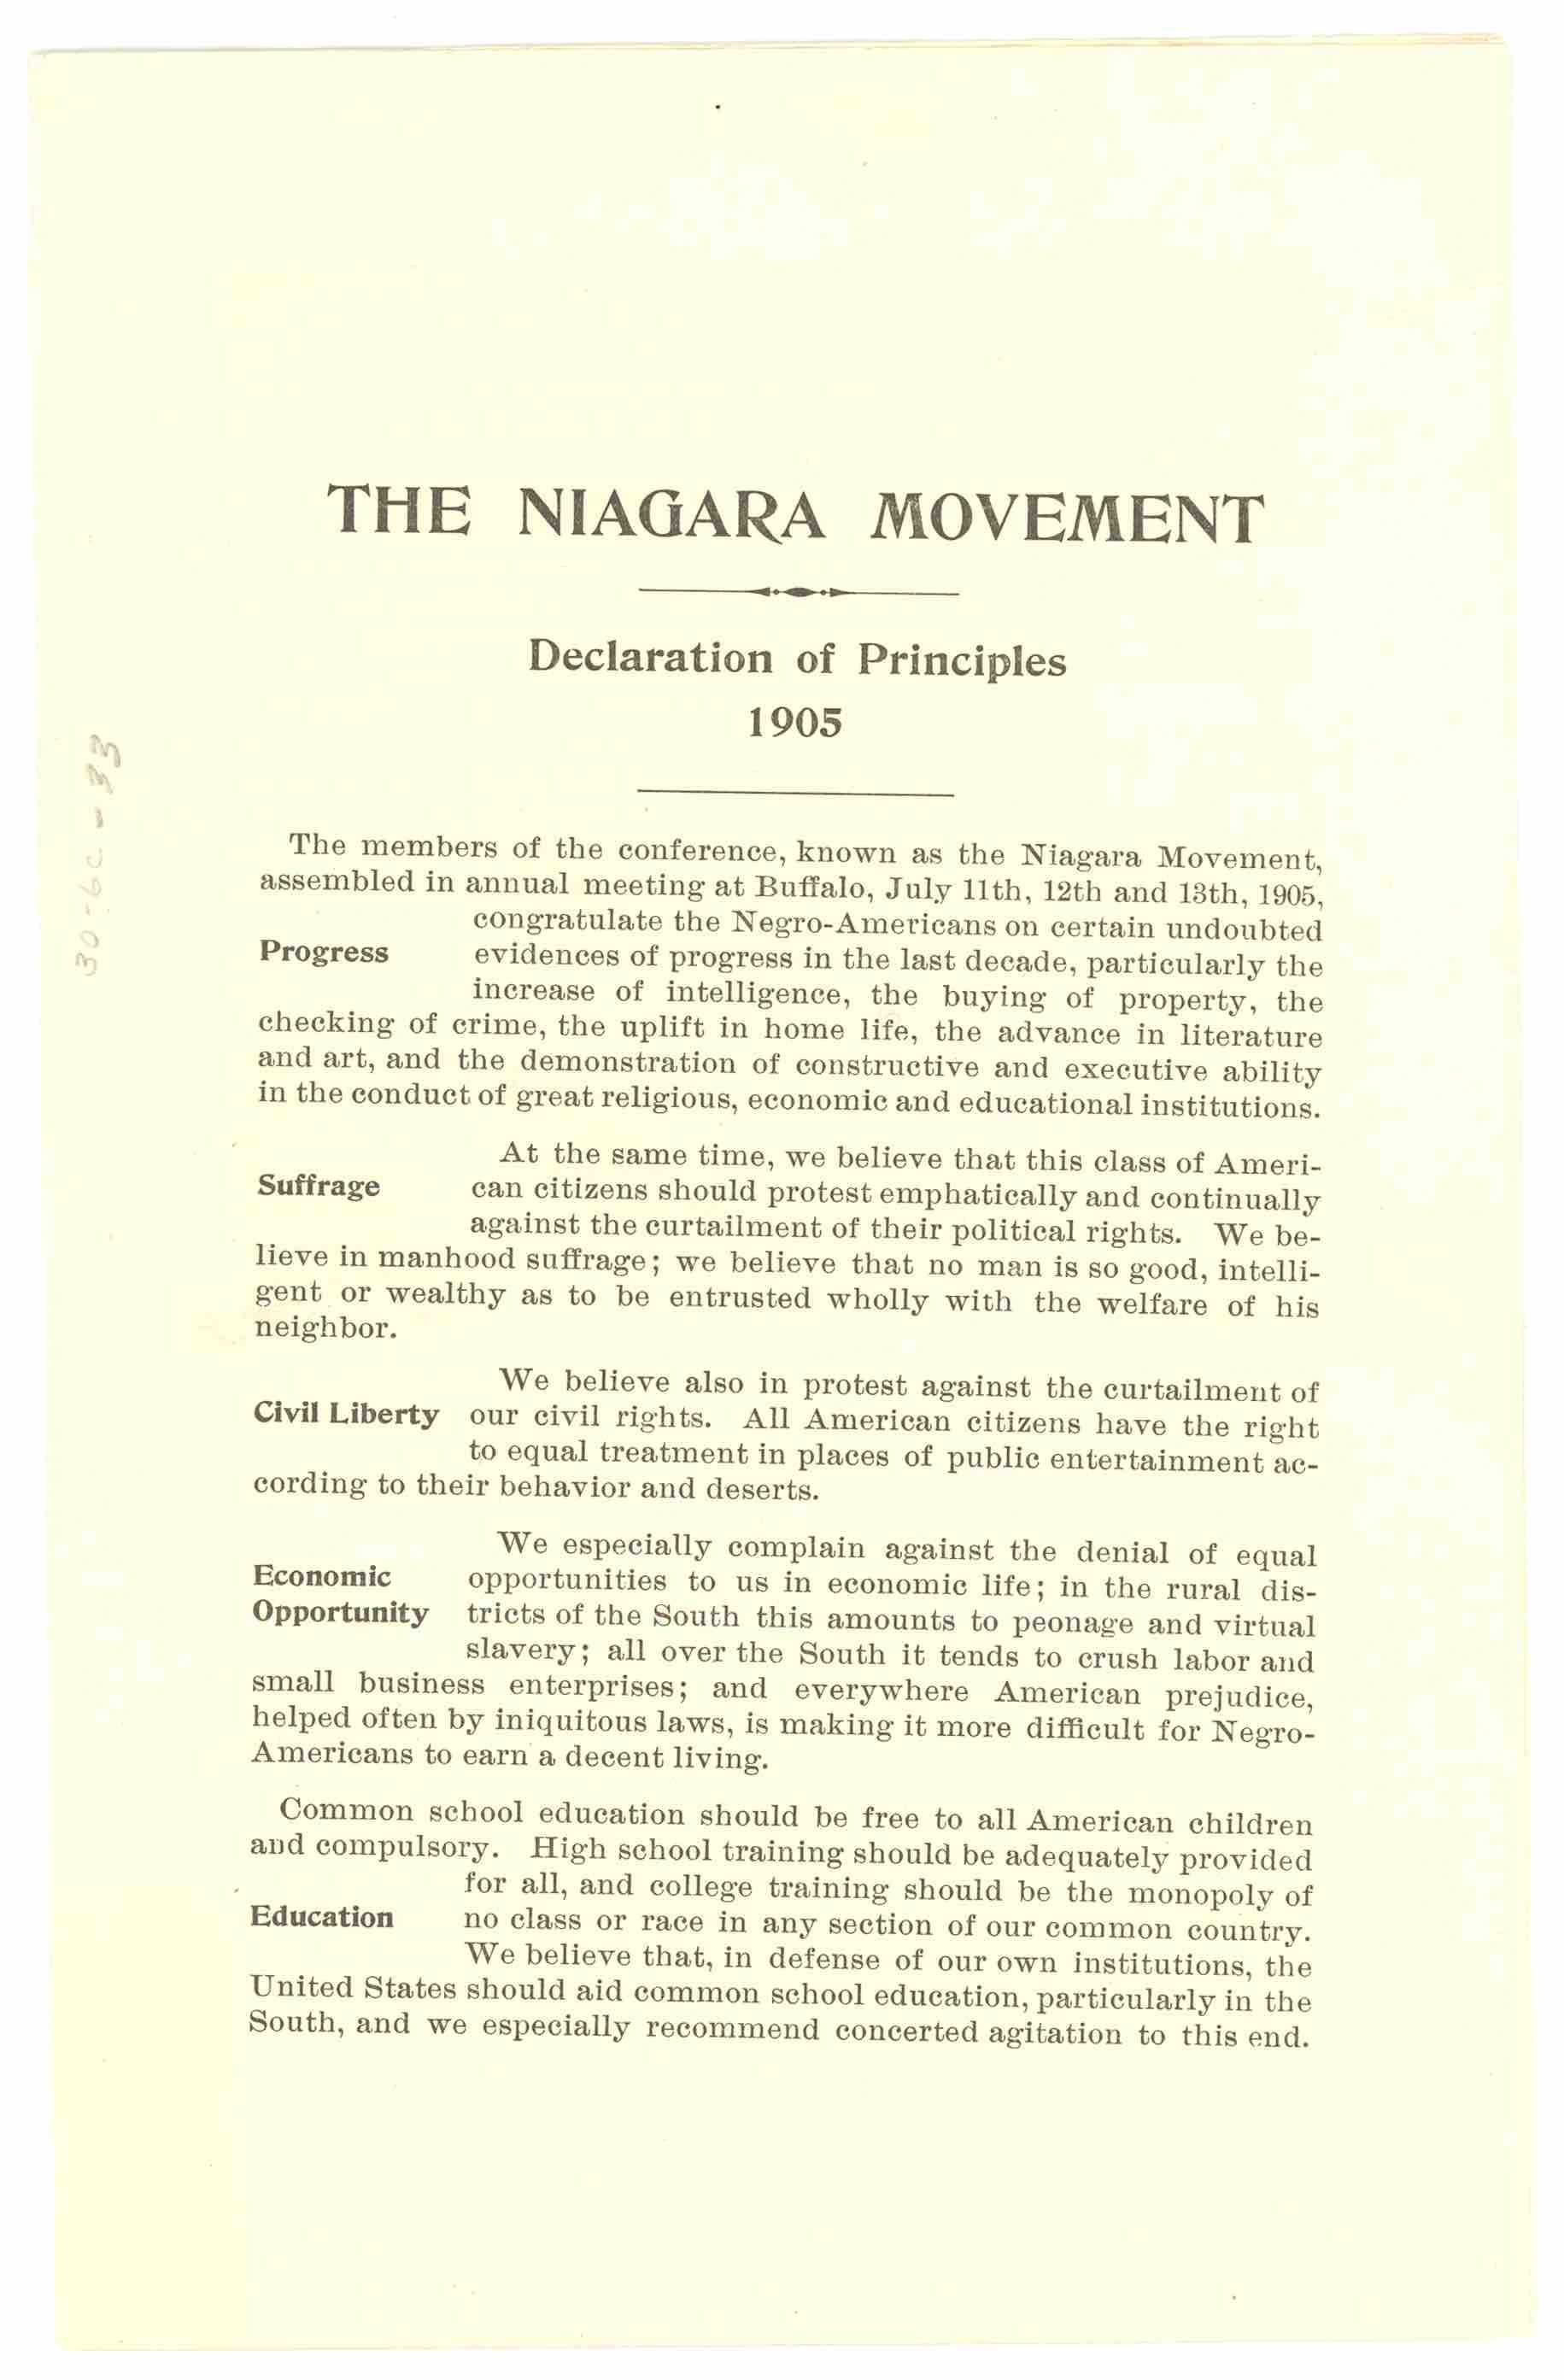 Image of the Niagara Movement's Declaration of Principles